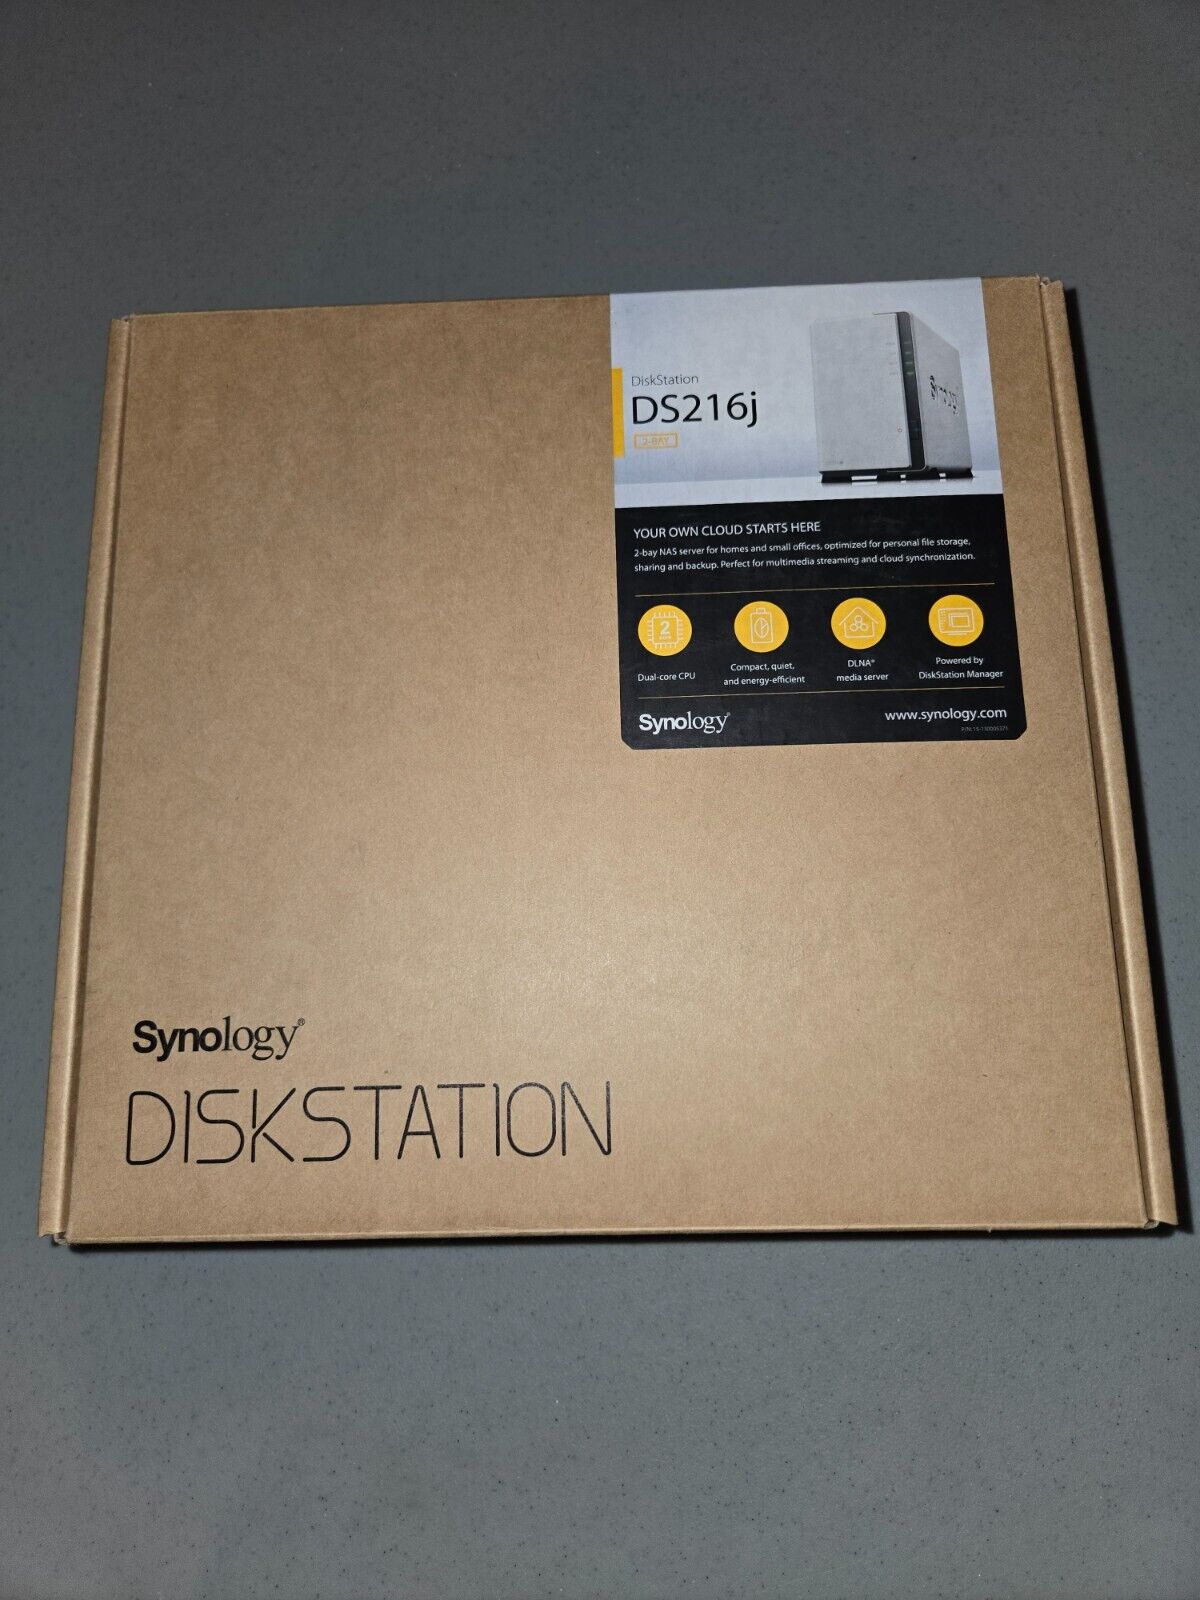 Synology DiskStation DS216j NAS - Network Attached Storage Unit